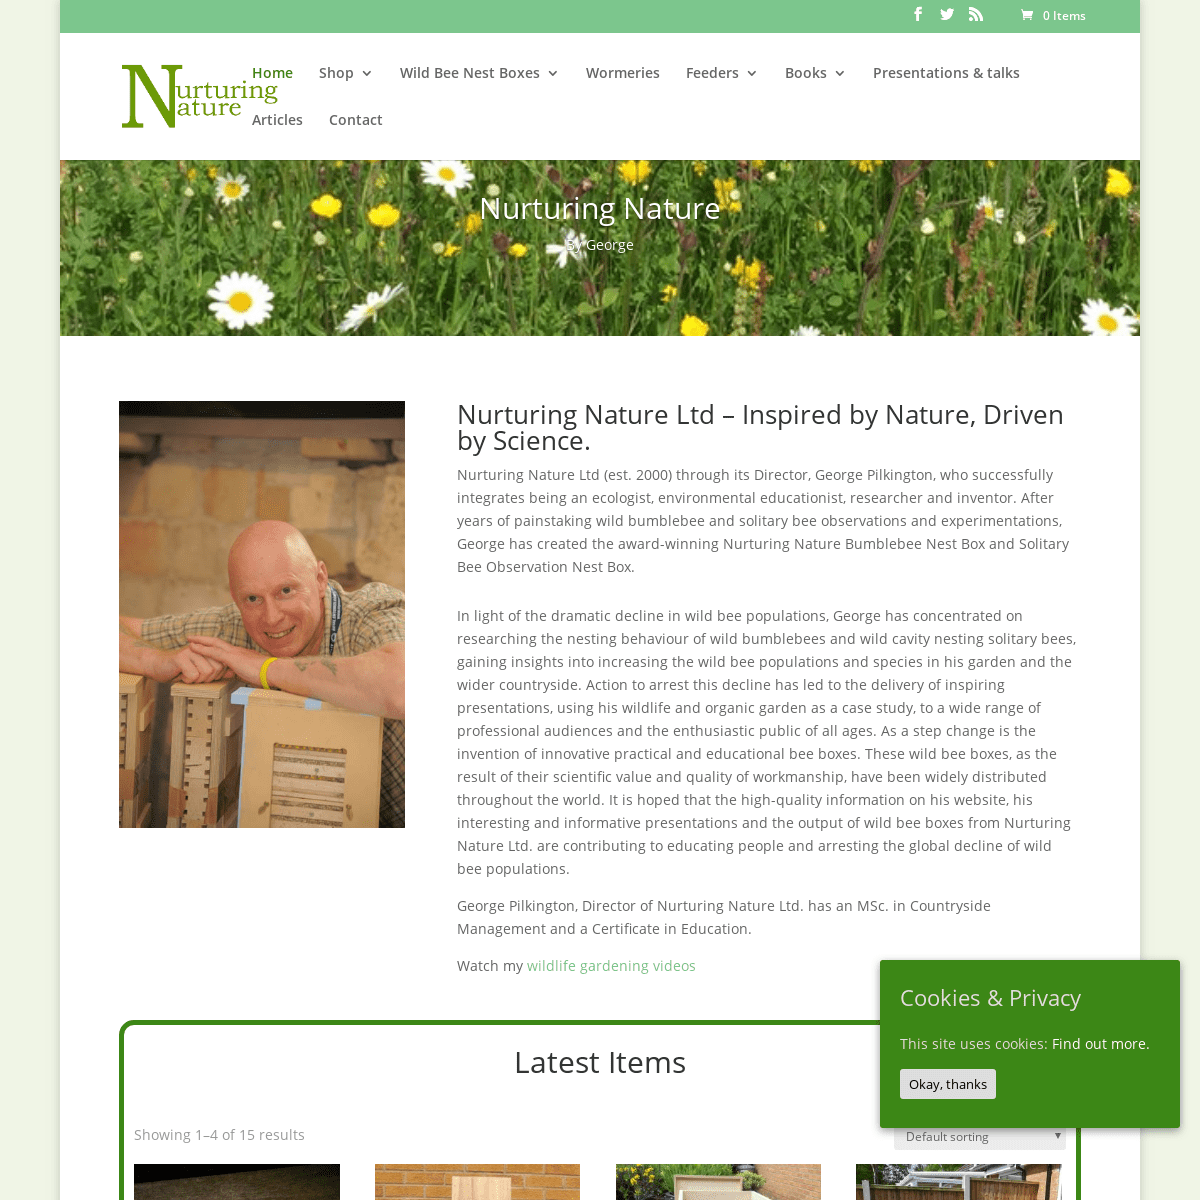 A complete backup of nurturing-nature.co.uk